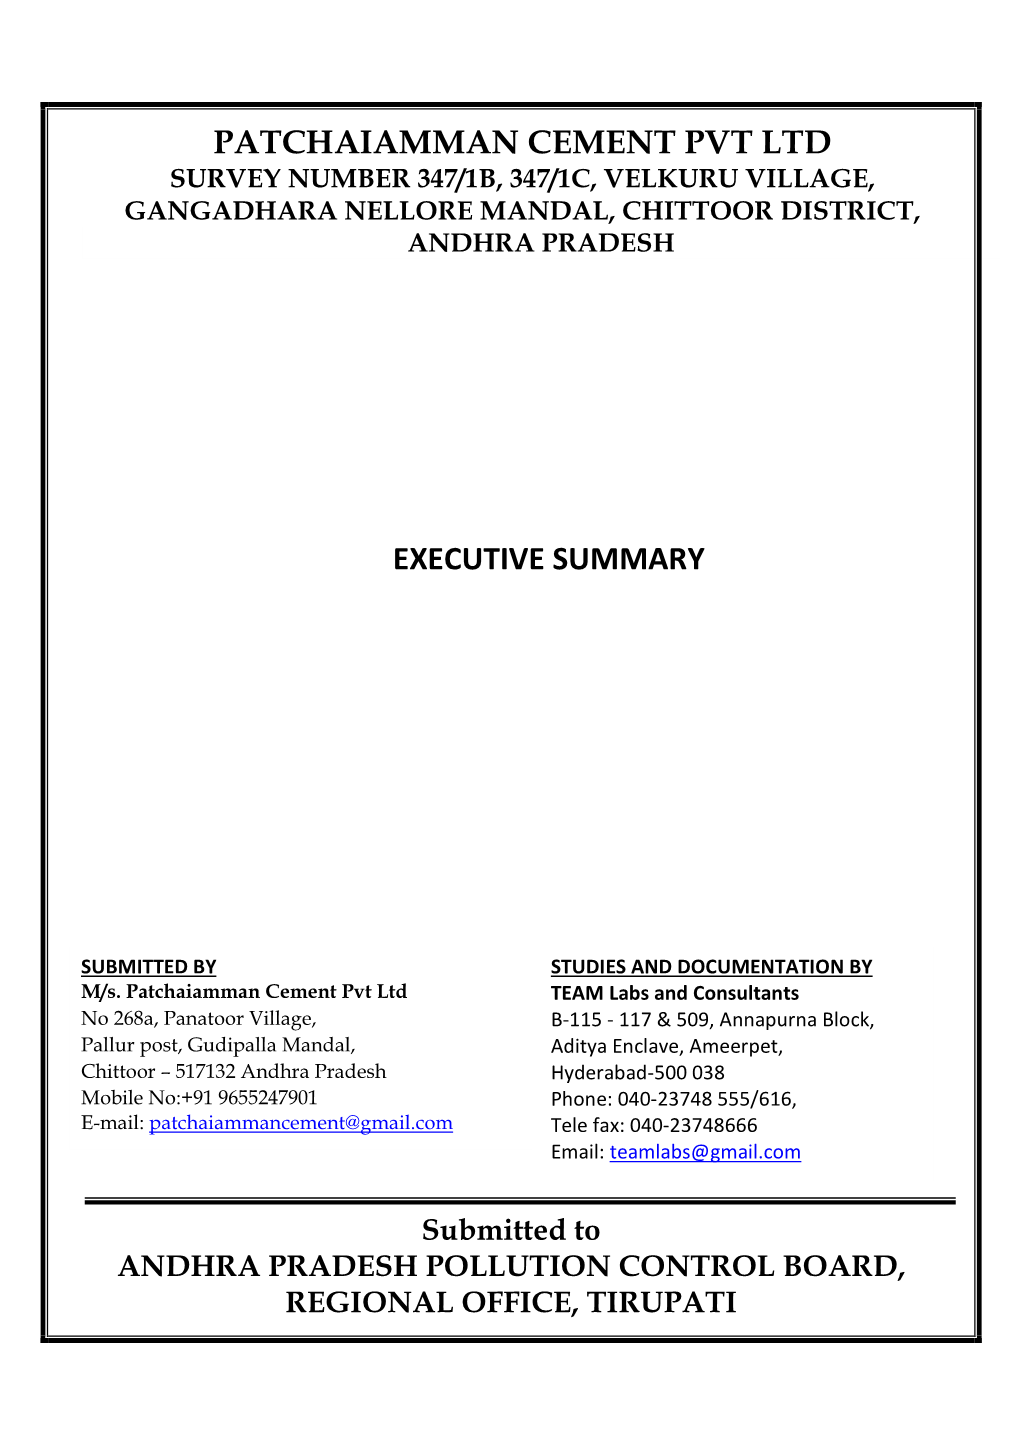 Patchaiamman Cement Pvt Ltd Executive Summary